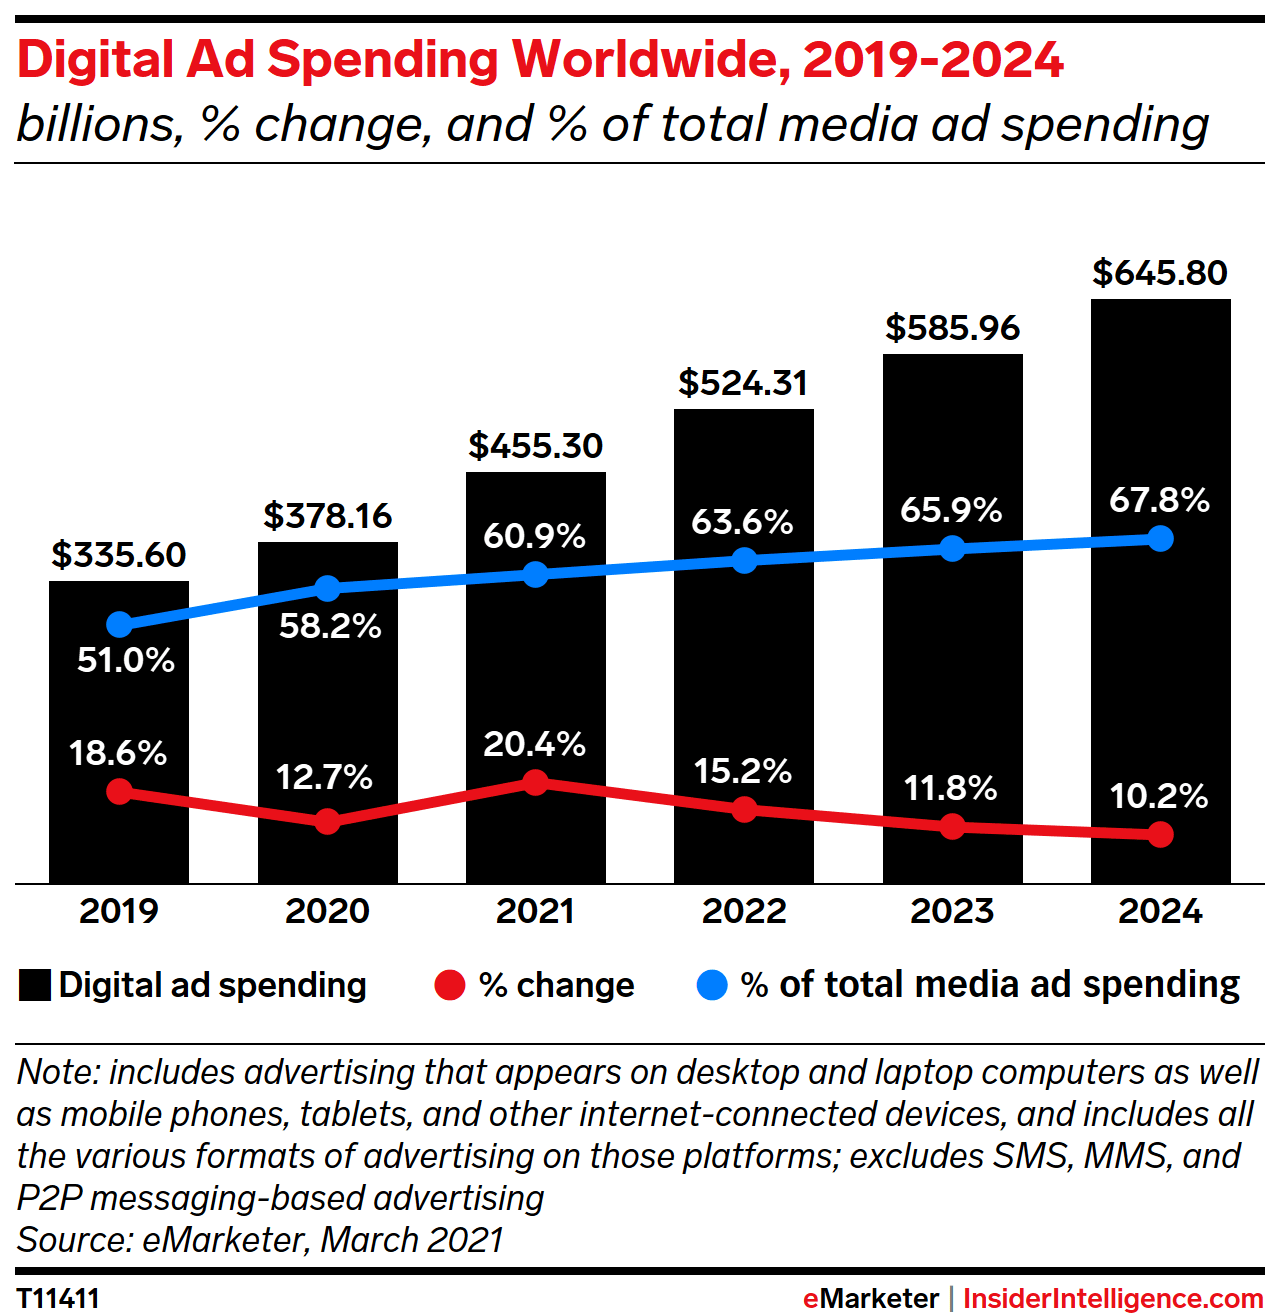 Digital Ad Spending Worldwide